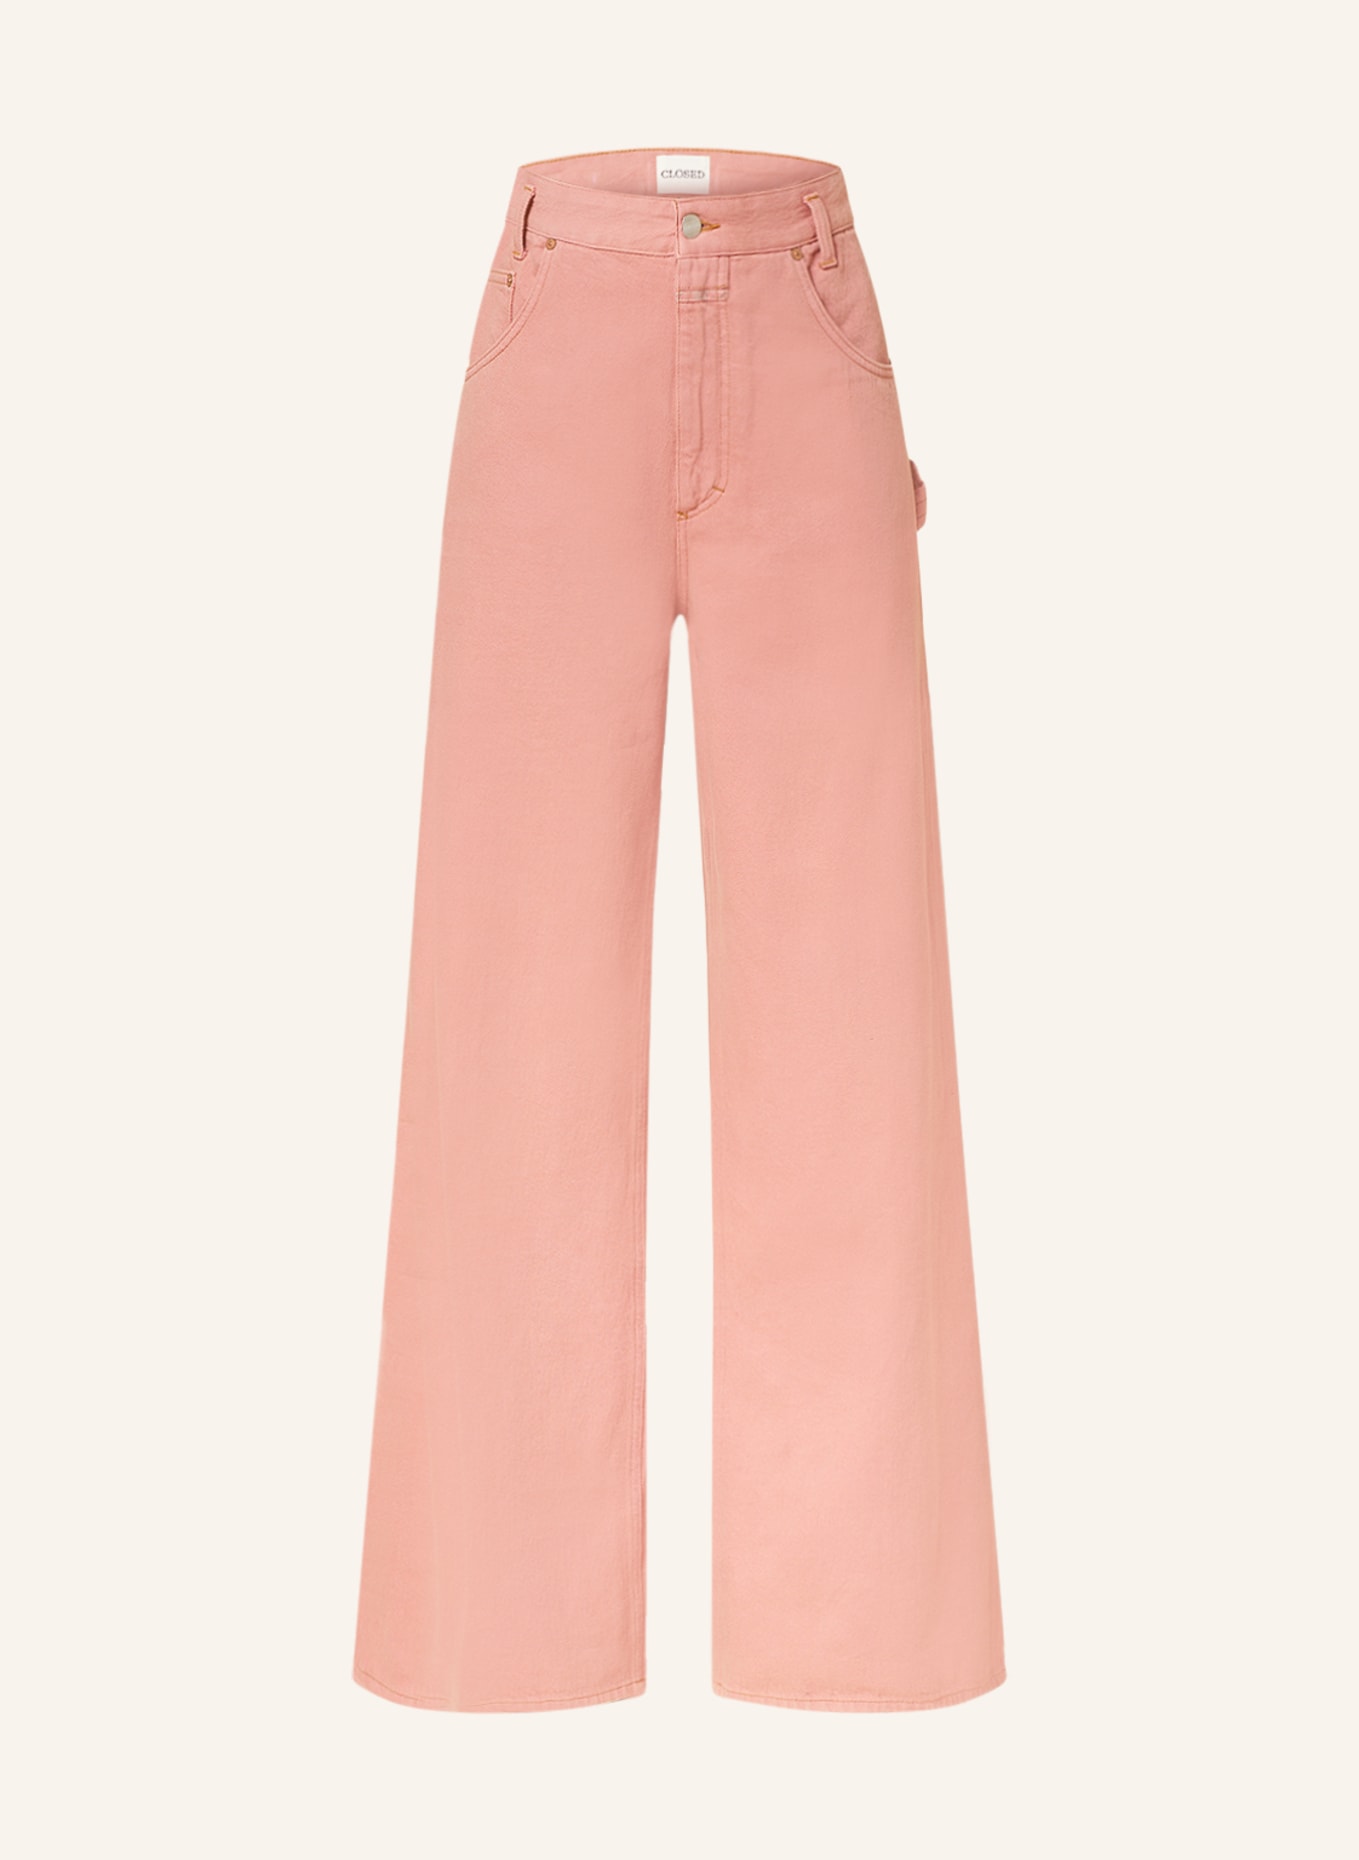 CLOSED Straight Jeans MORUS, Farbe: 820 rose dust (Bild 1)